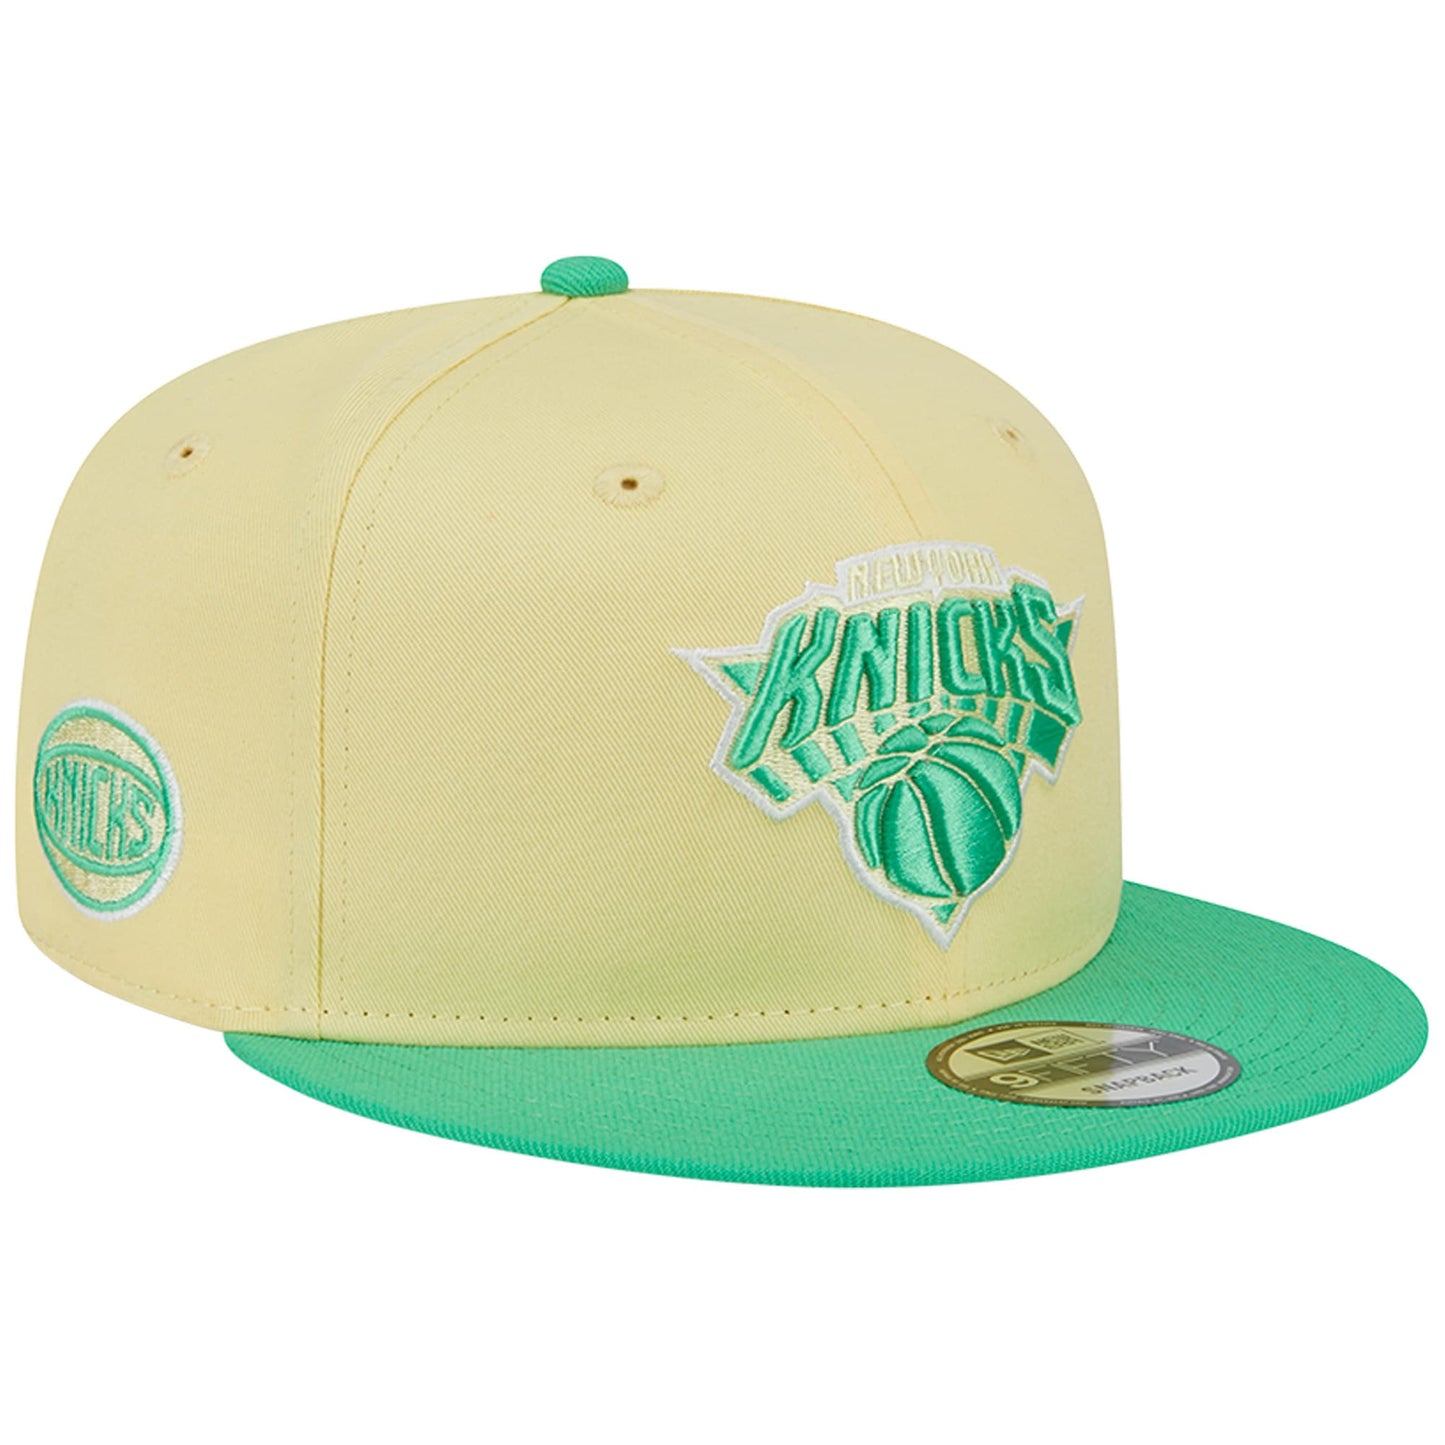 New York Knicks New Era 9FIFTY Hat - Yellow/Green